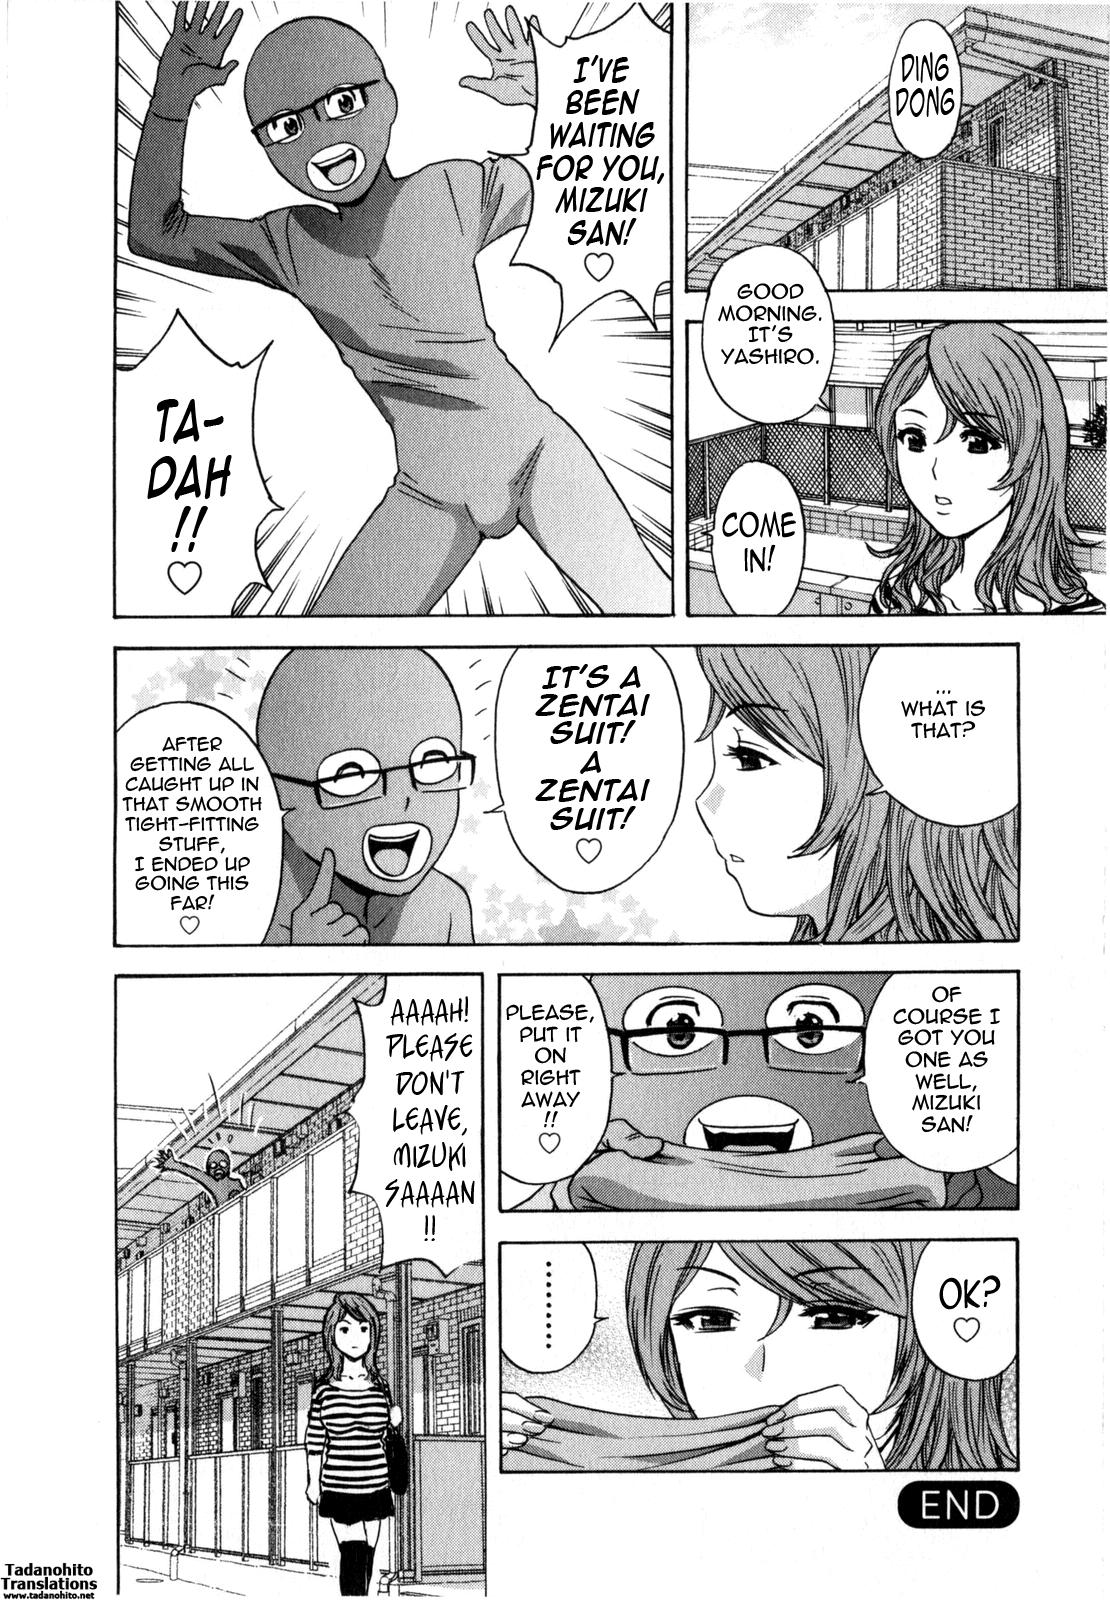 [Hidemaru] Life with Married Women Just Like a Manga 2 - Ch. 1-5 [English] {Tadanohito} 103